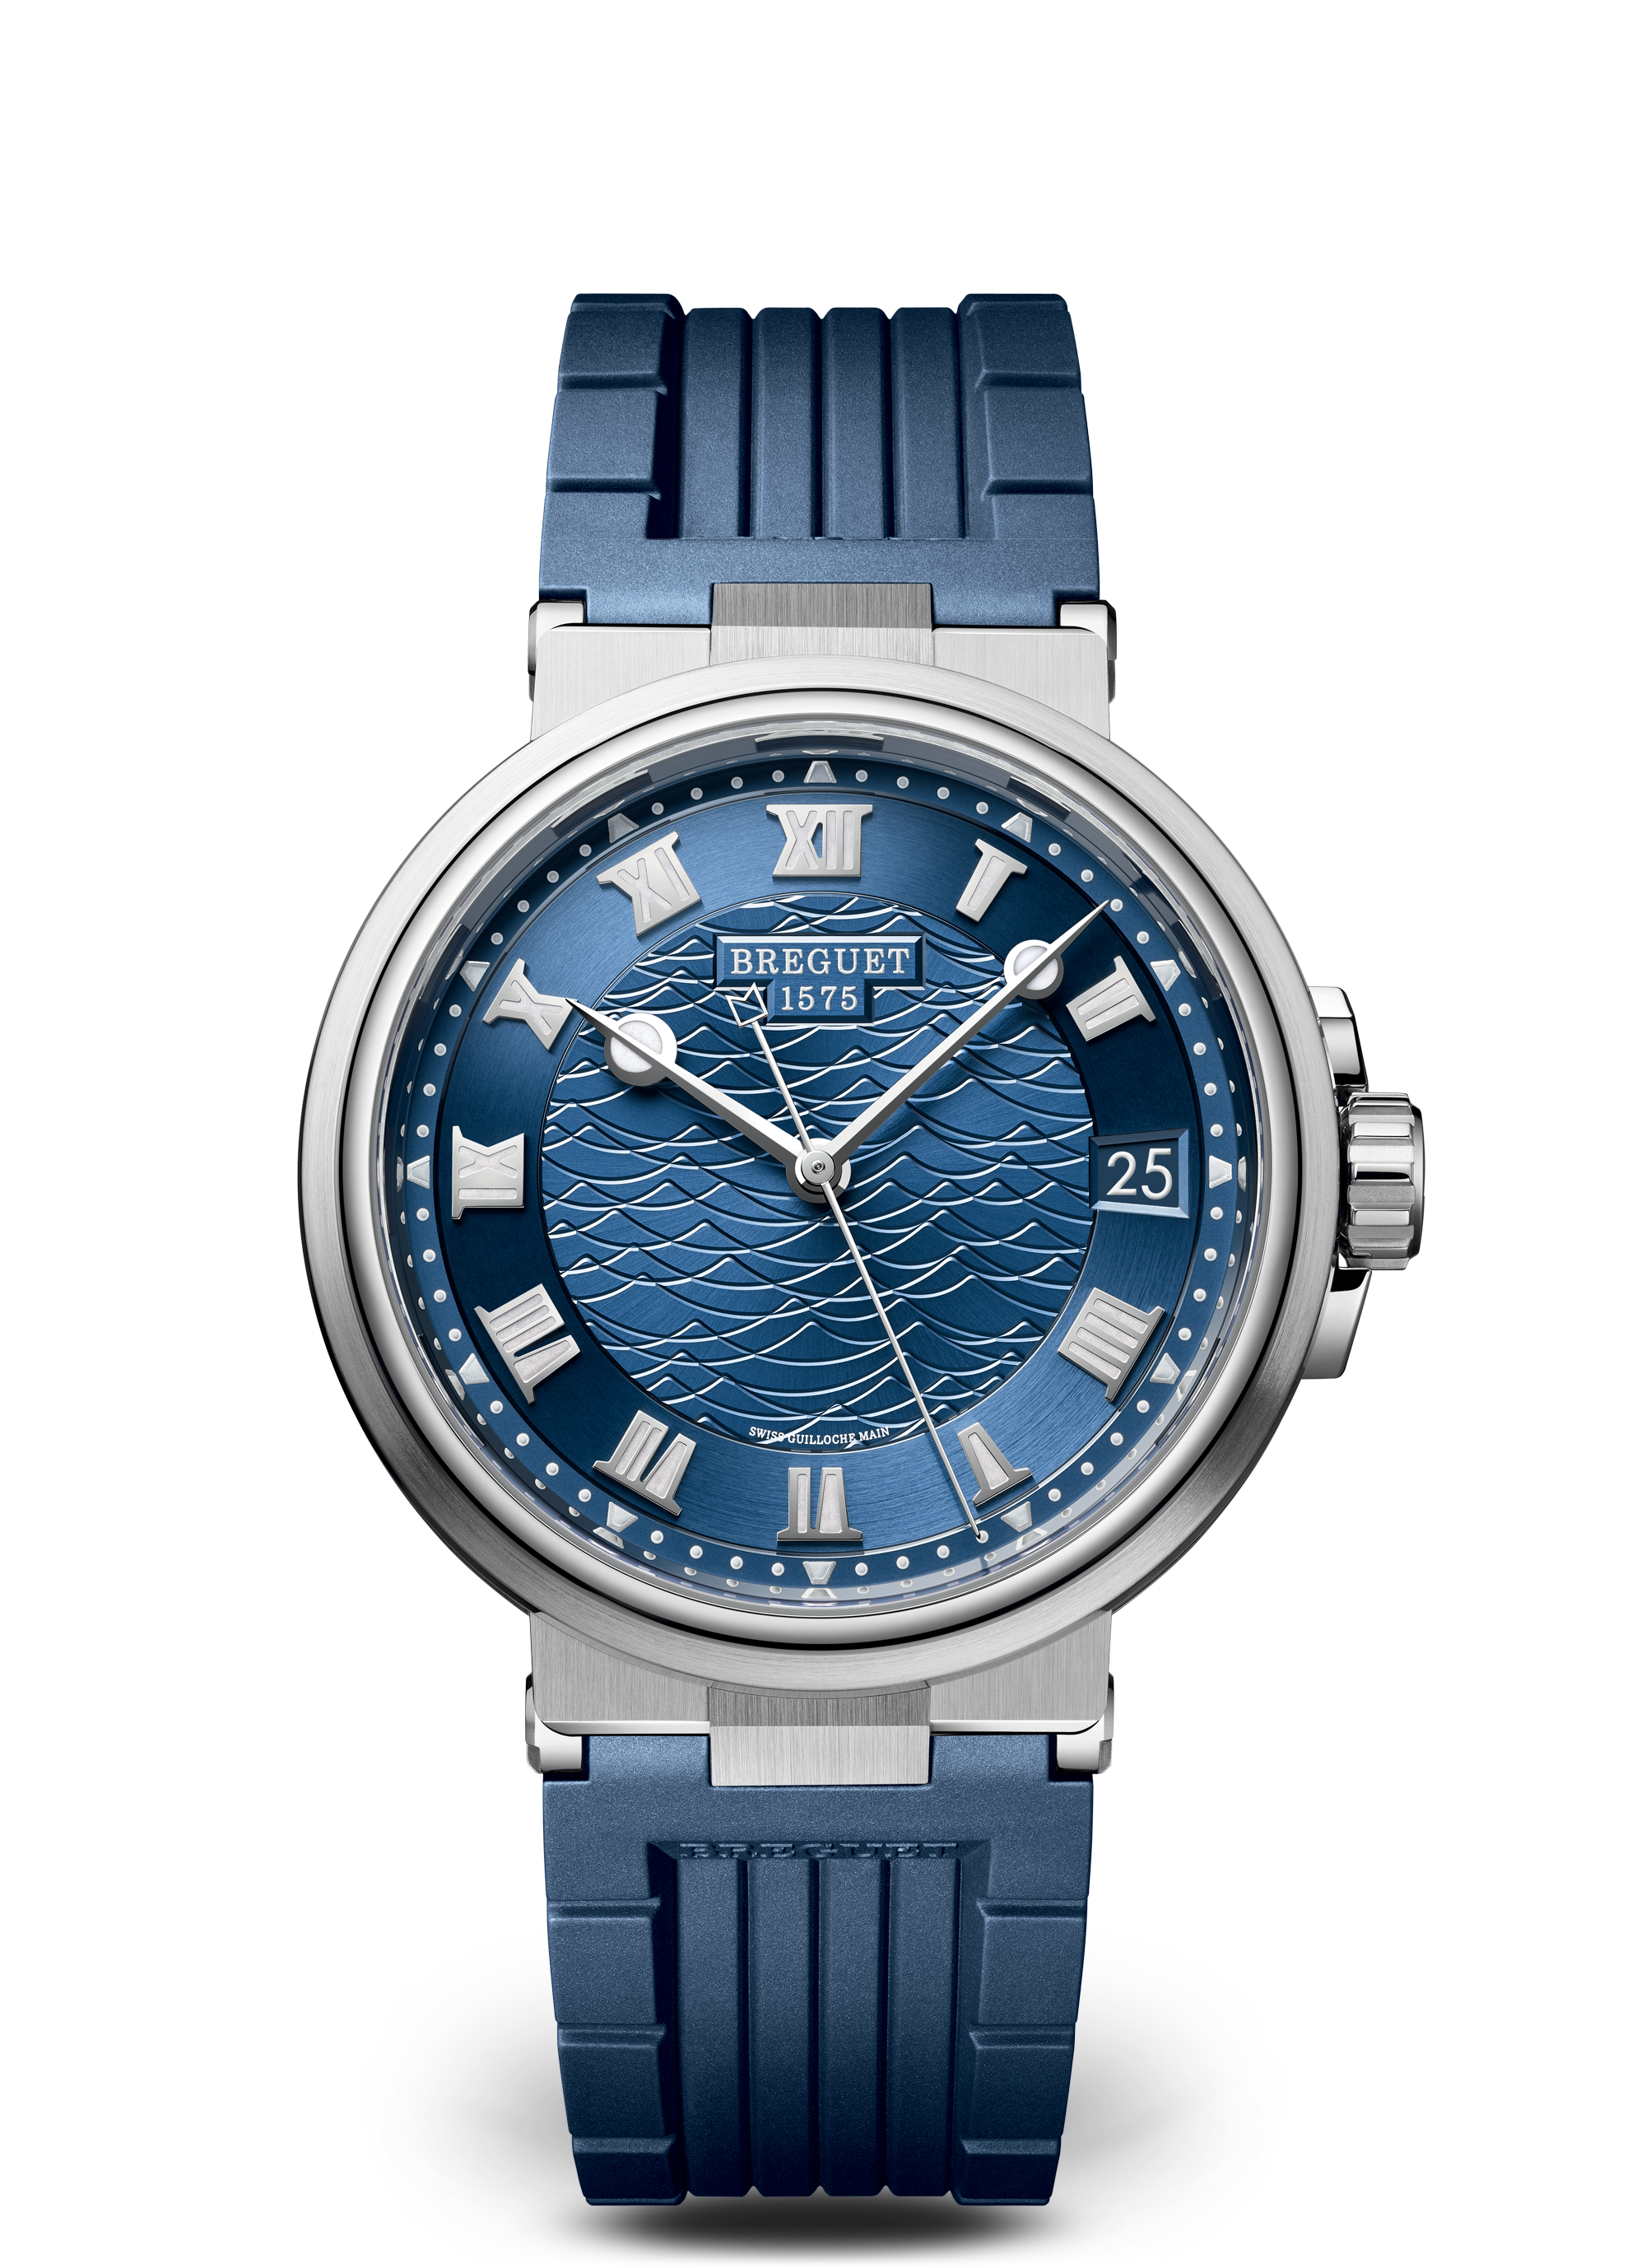 Replica Of Breguet Men'S Chronograph Watch